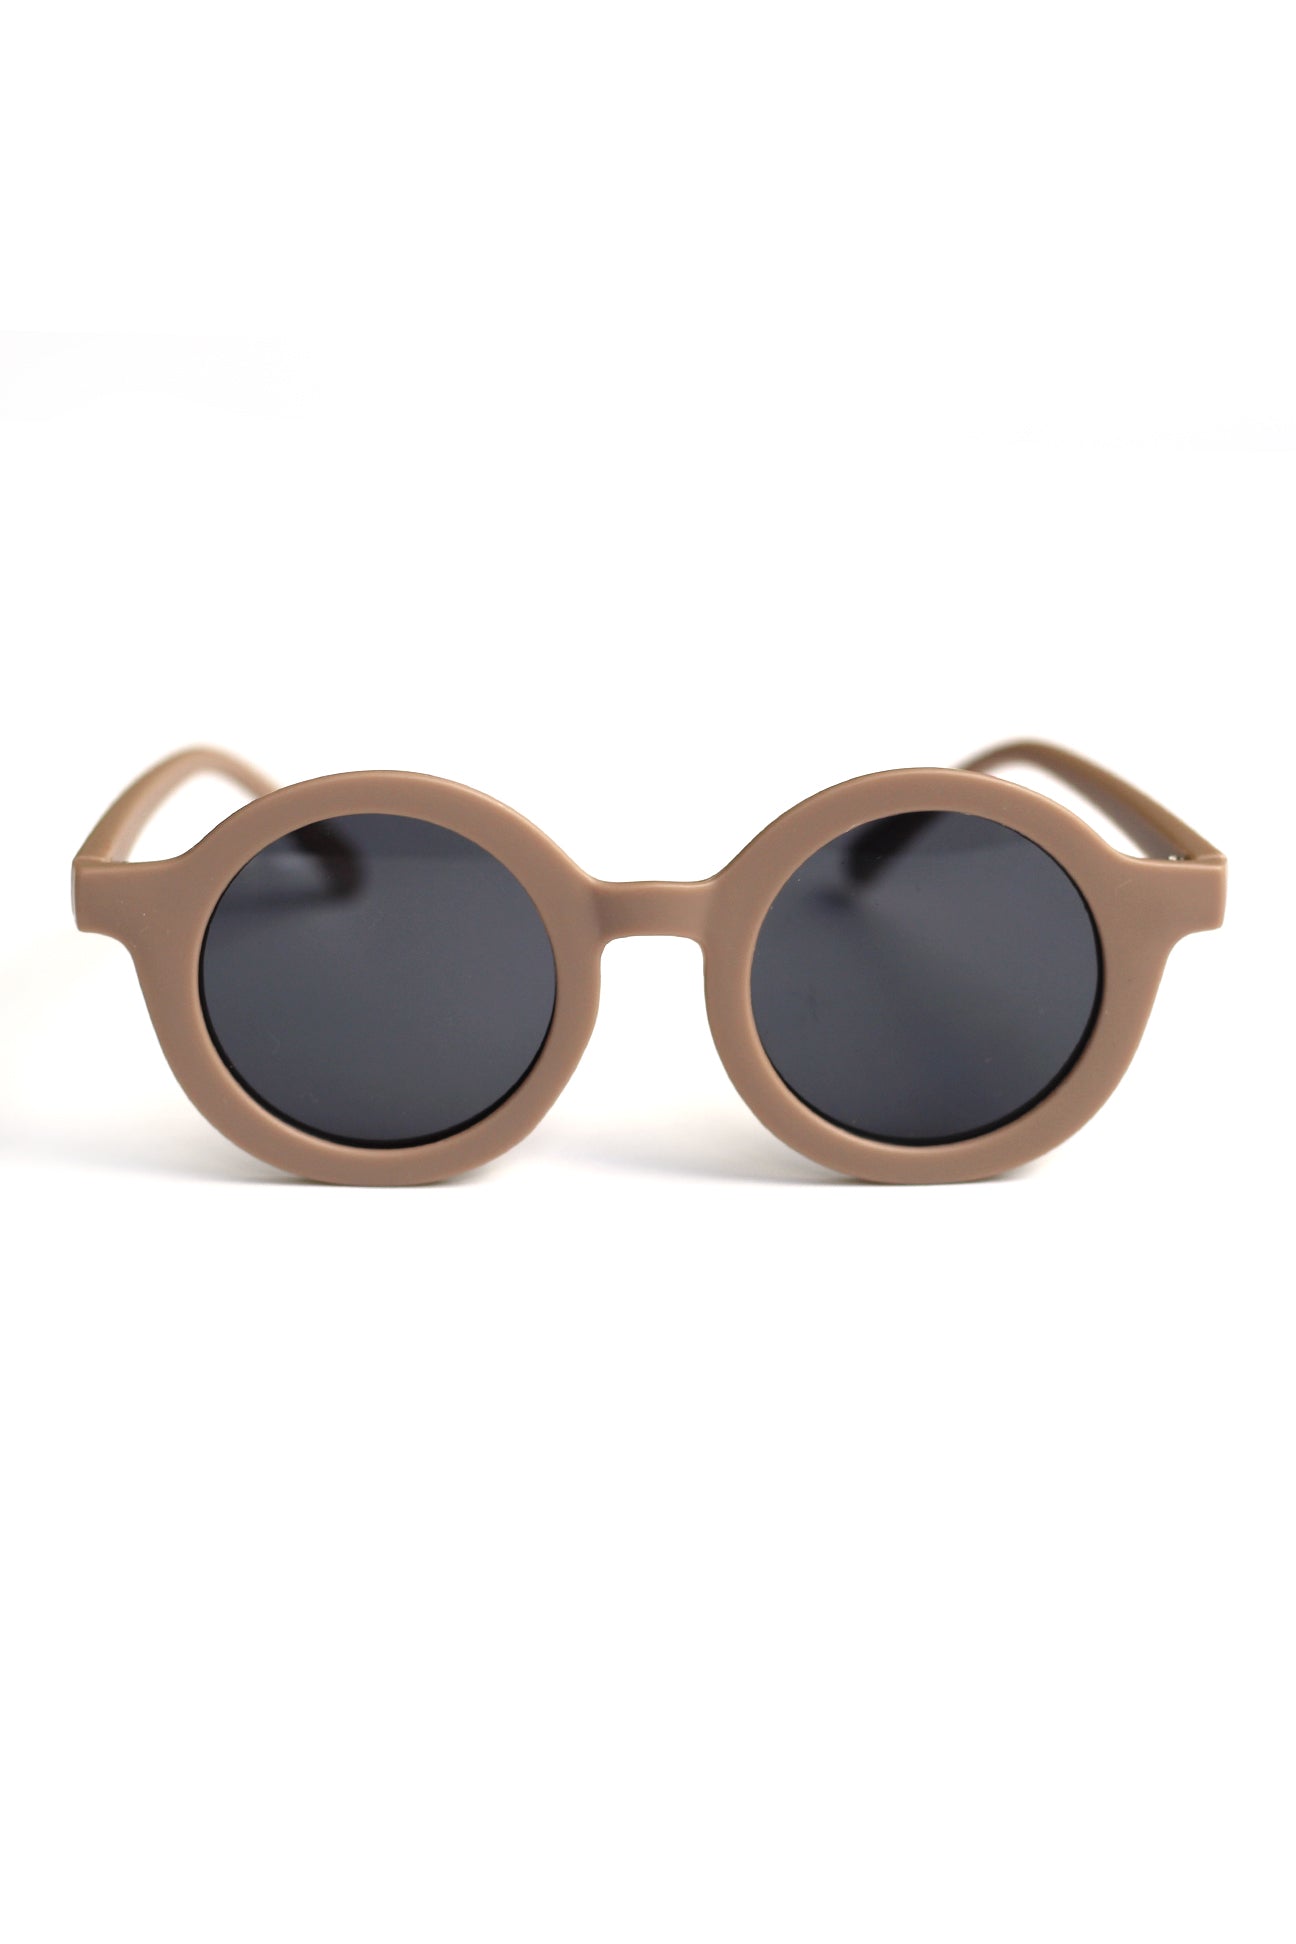 Sustainable Sunglasses - Taupe